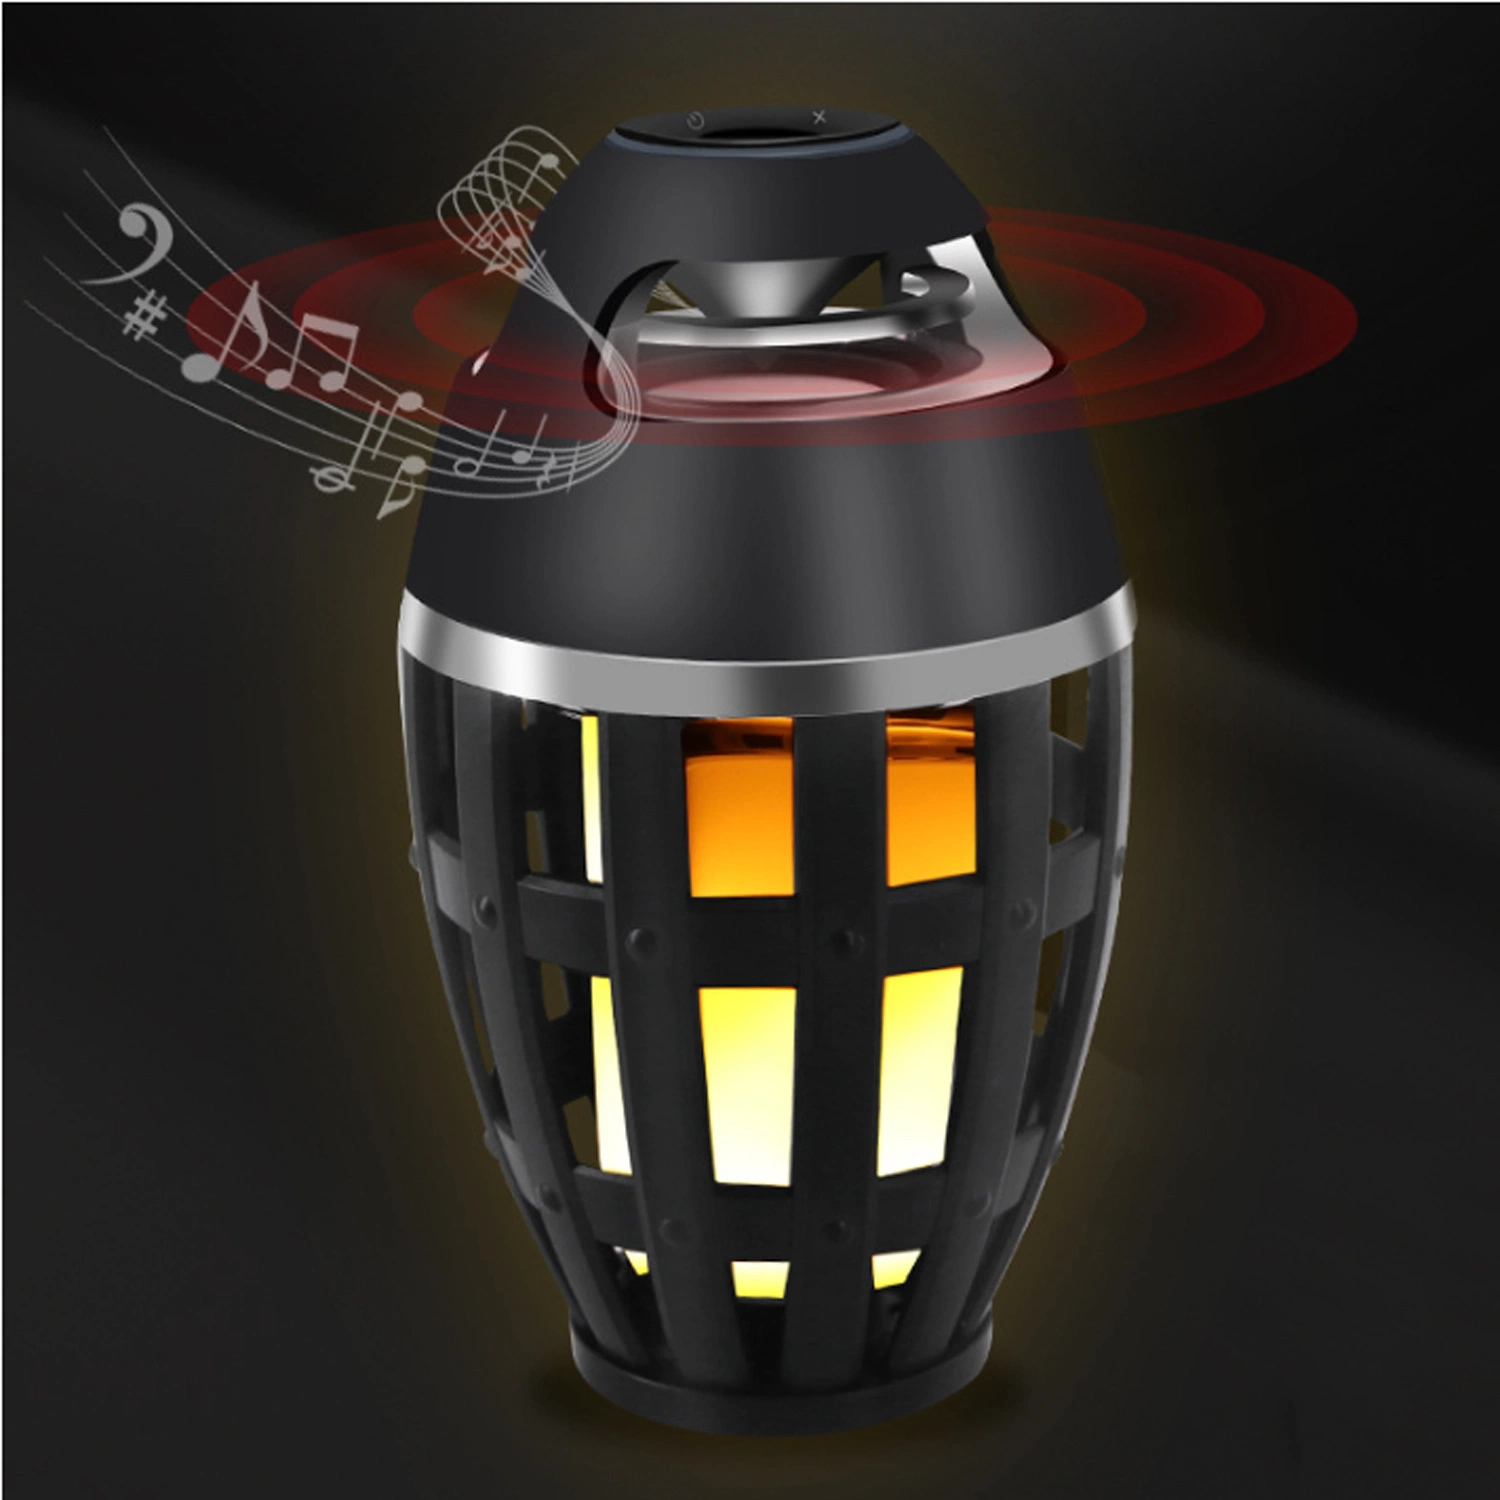 LED-Flame-Lautsprecher, wasserdichte tragbare Bluetooth-Audio flackert Atmosphäre Lampe